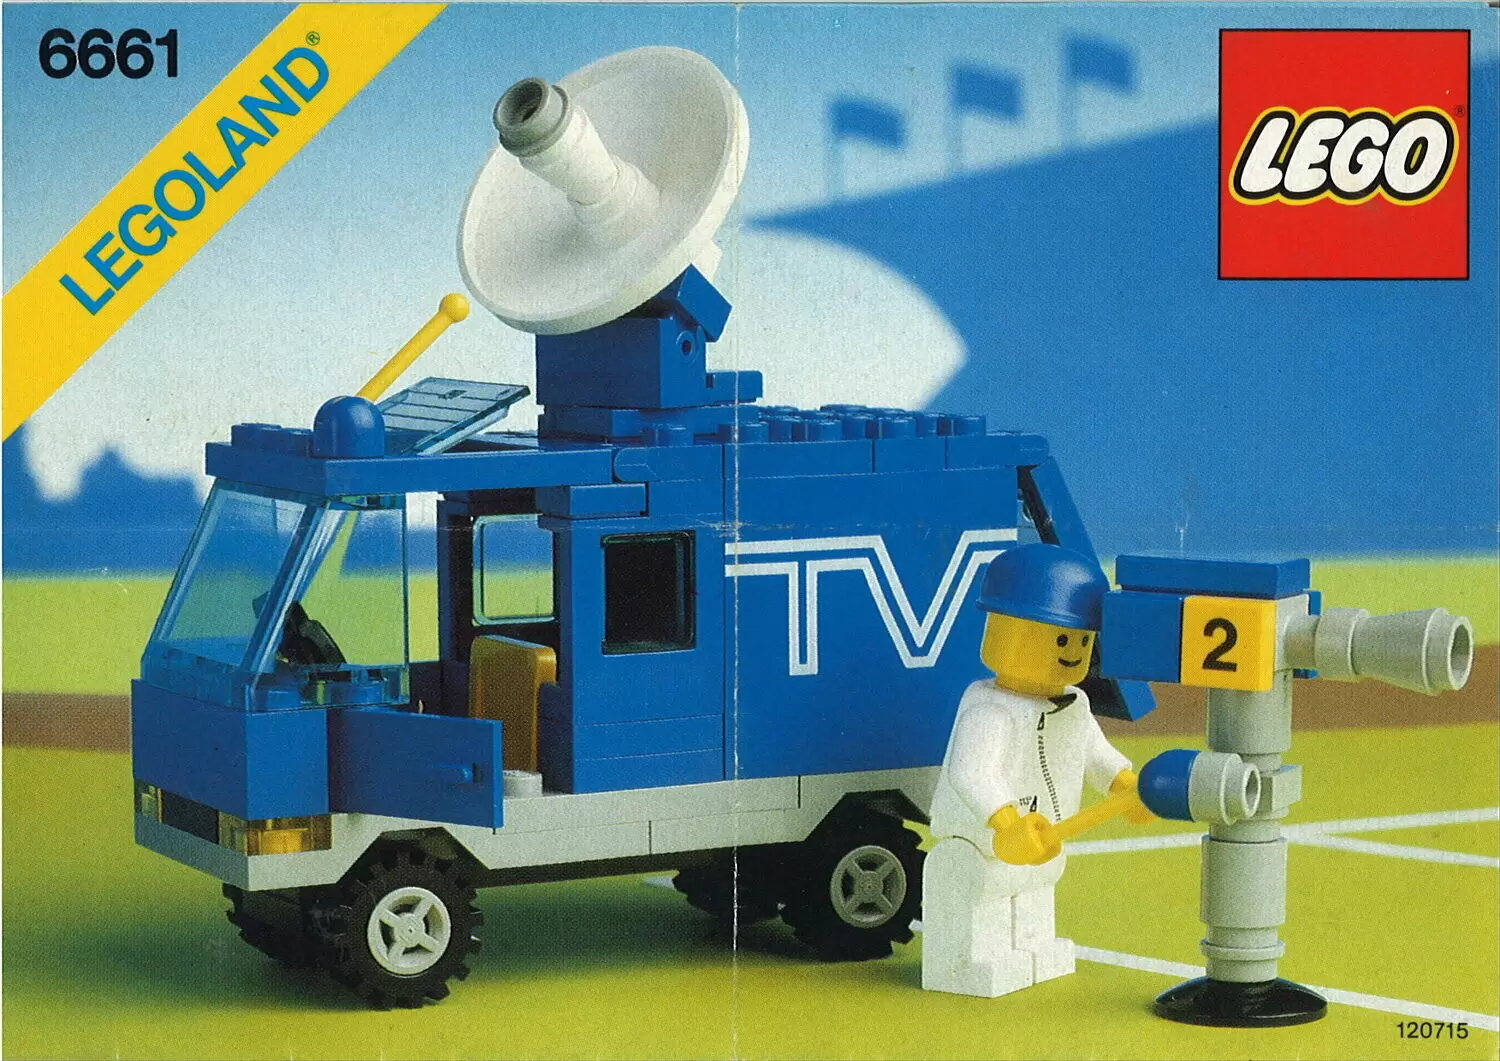 Legoland - Mobile TV Studio